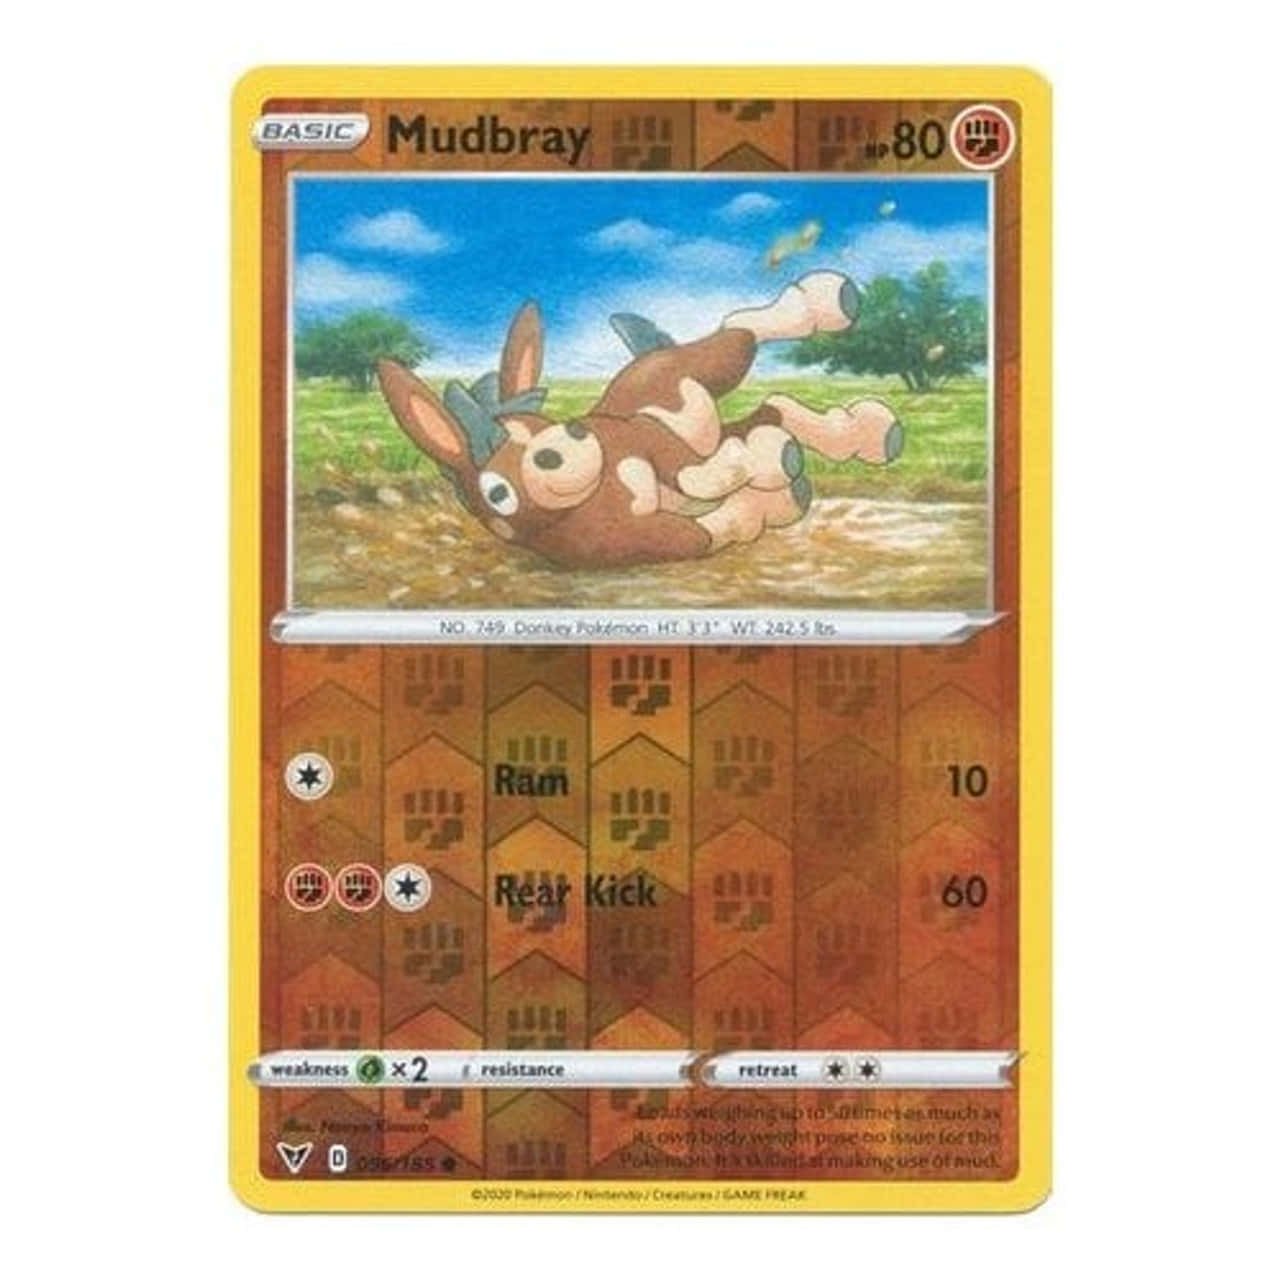 Adorable Mudbray Pokemon Card Wallpaper